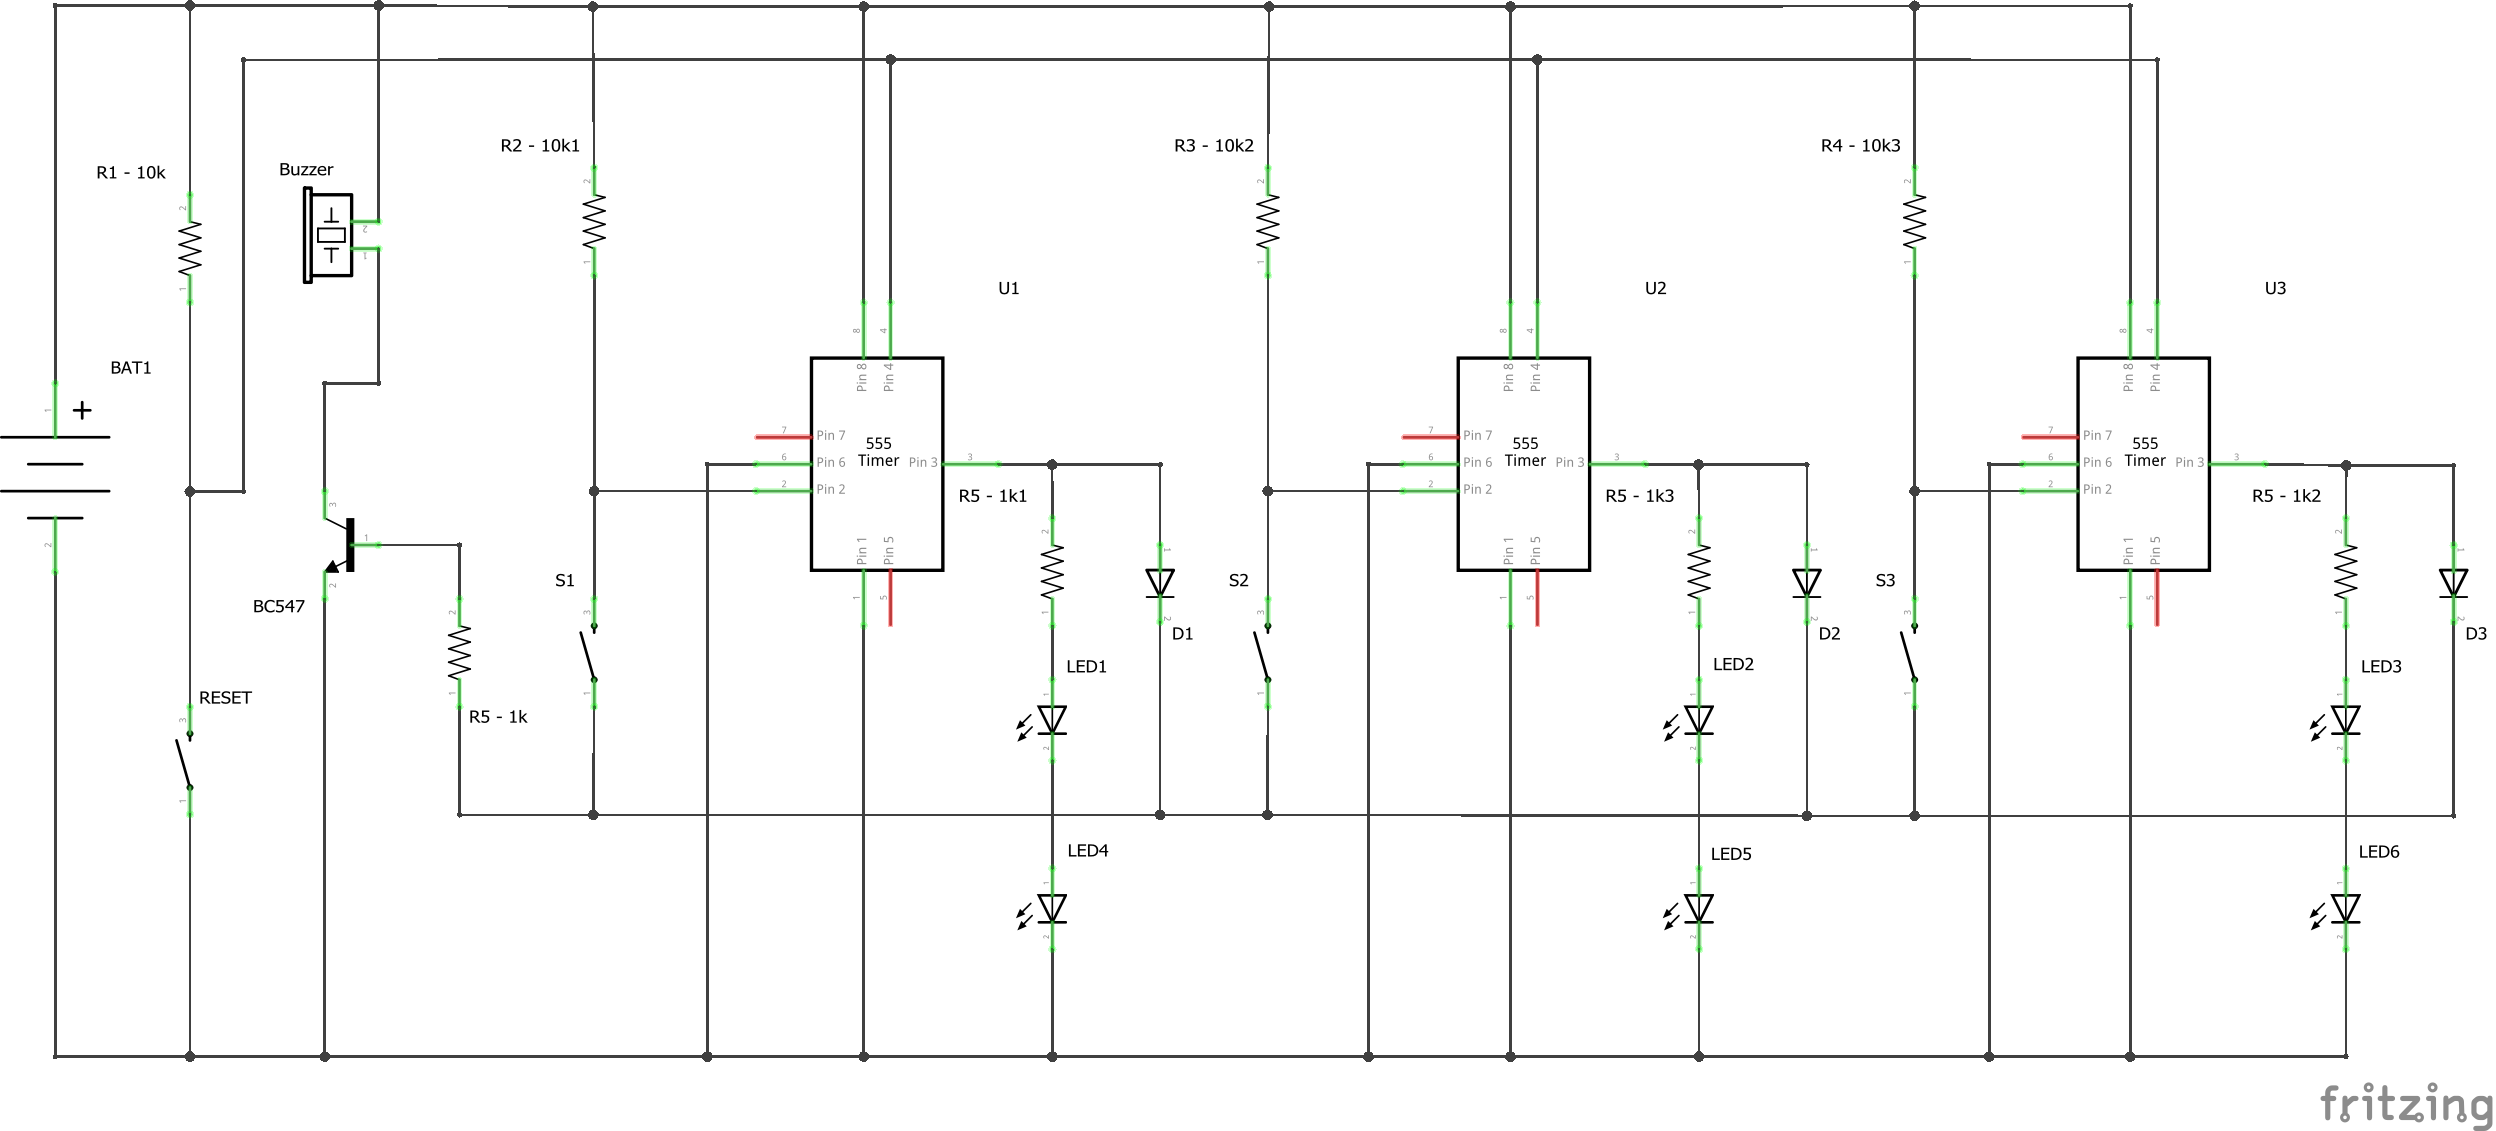 Game Show Buzzer Circuit Diagram - Wiring View and Schematics Diagram